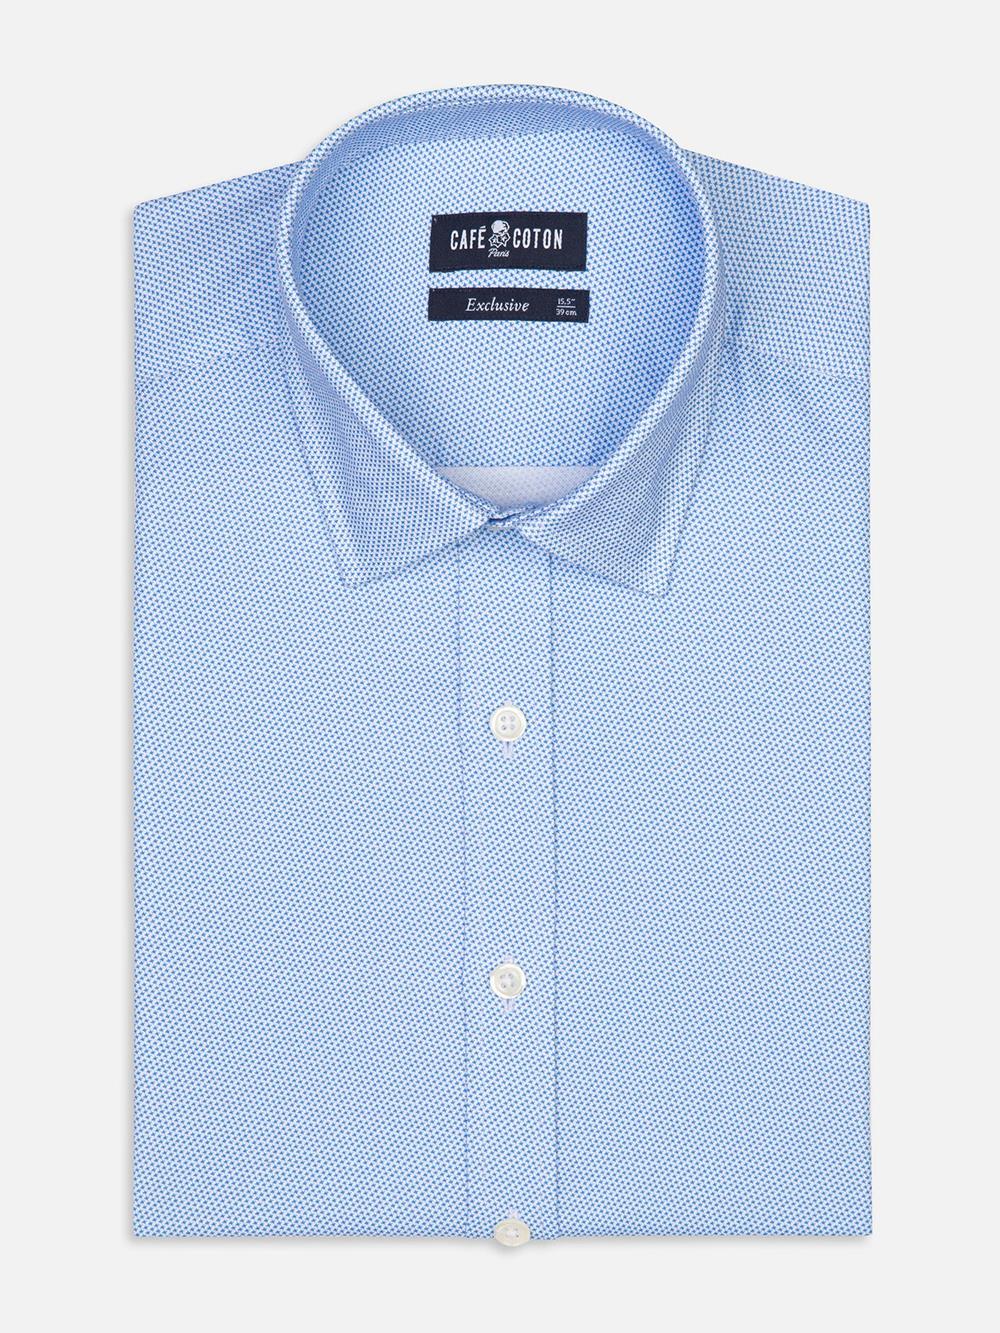 Finn slim fit shirt with sky blue print pattern - Small collar